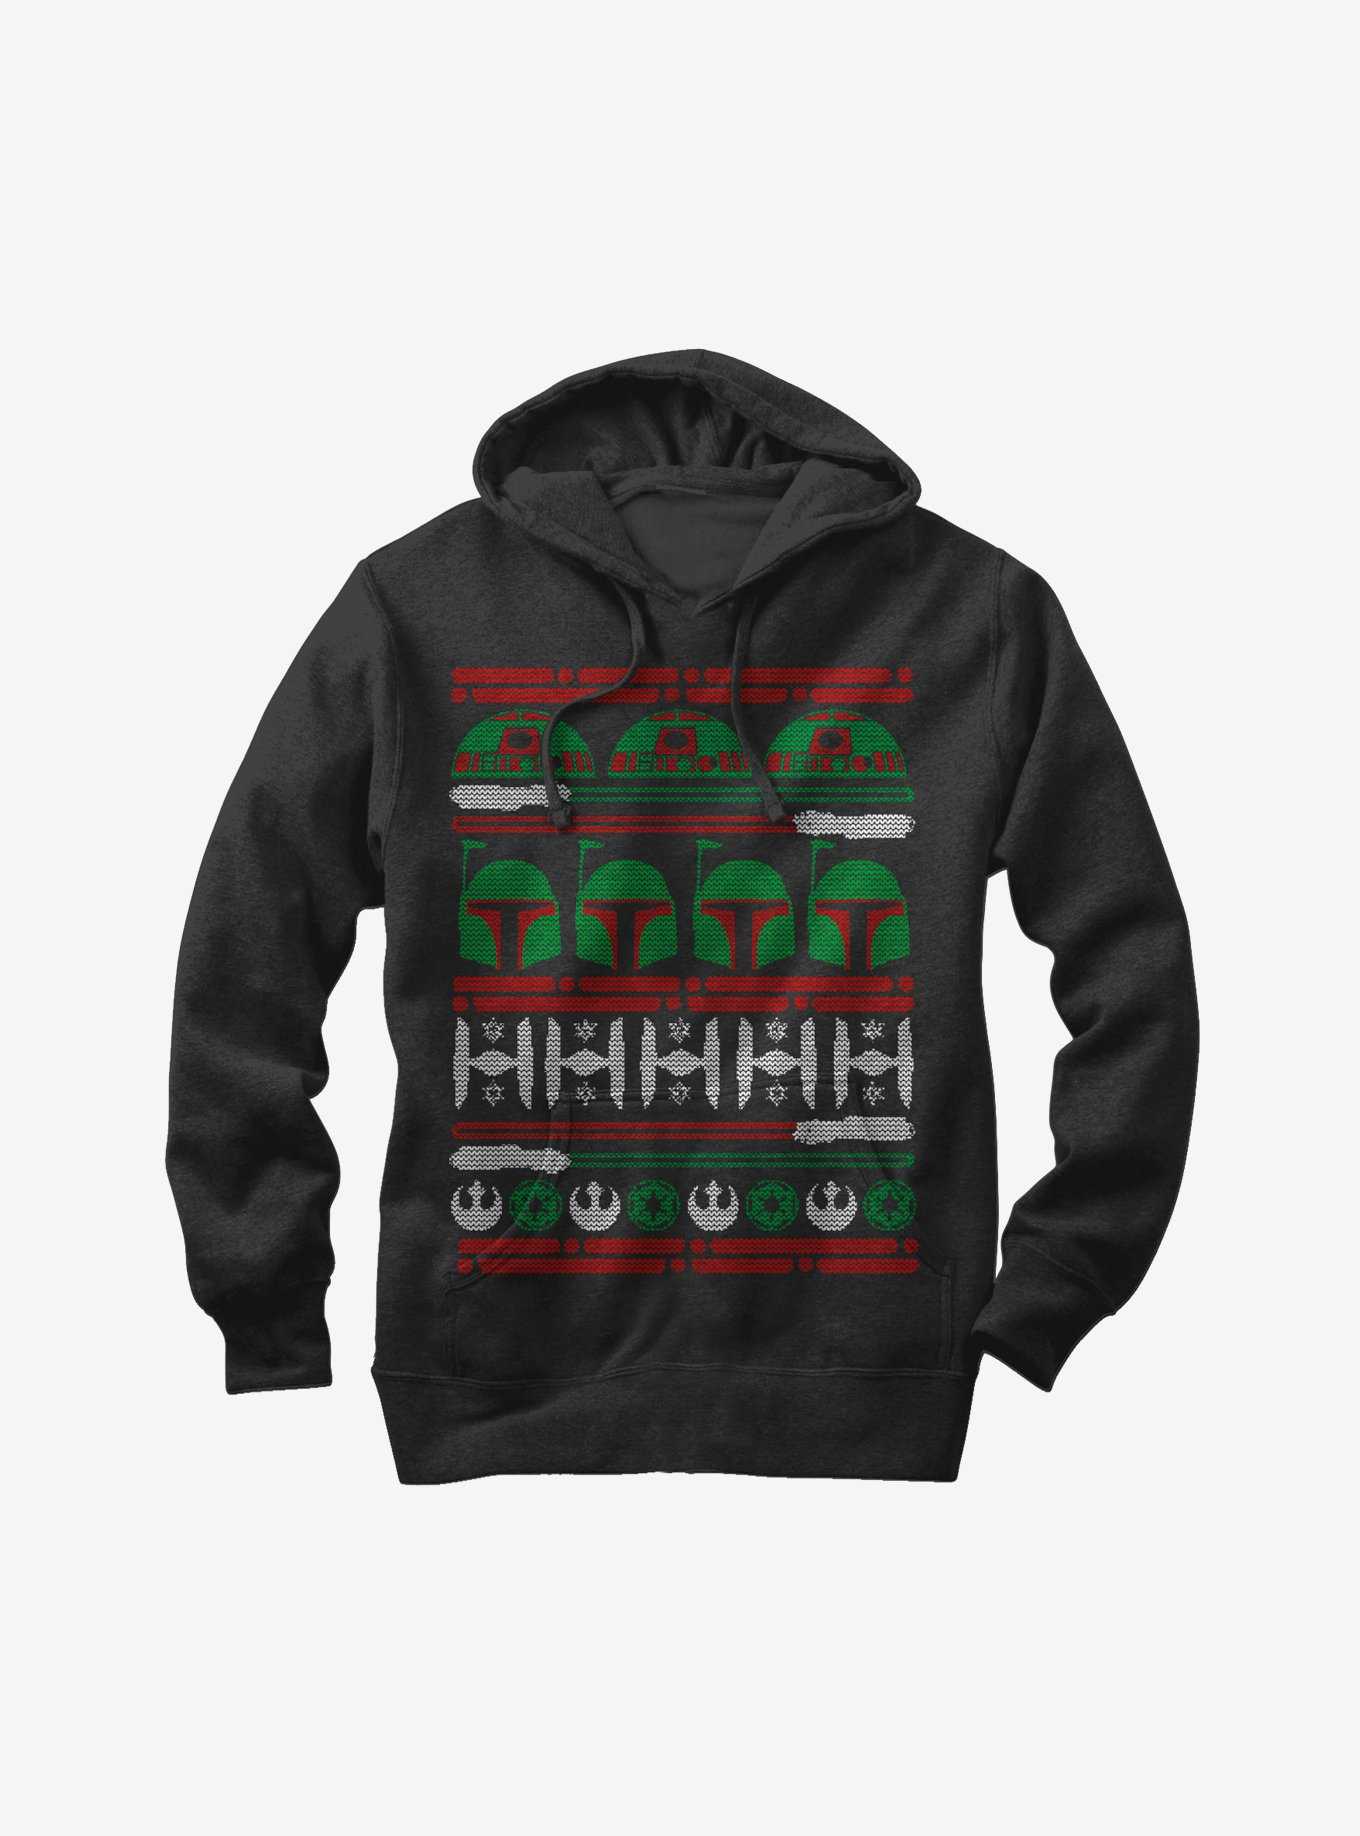 Star Wars Boba Fett Ugly Christmas Sweater Hoodie, , hi-res